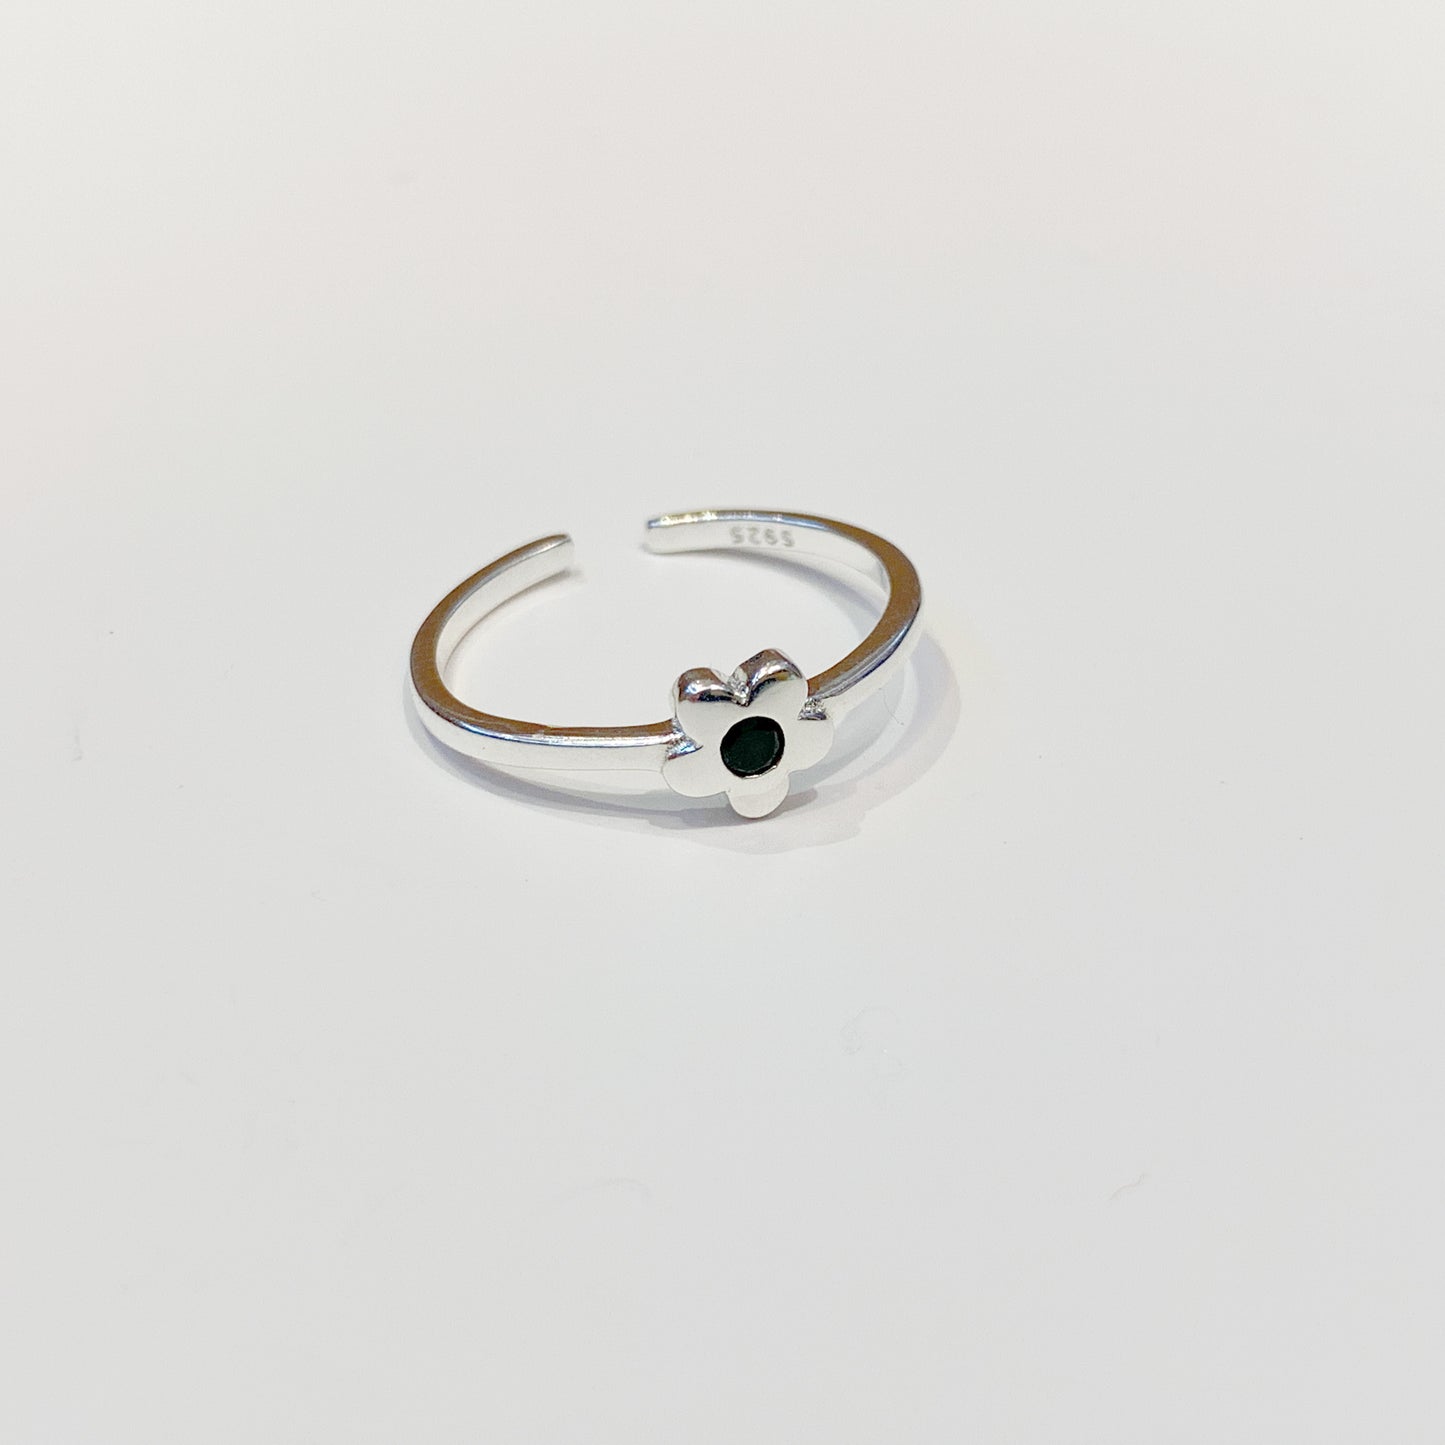 Silver flower adjustable ring